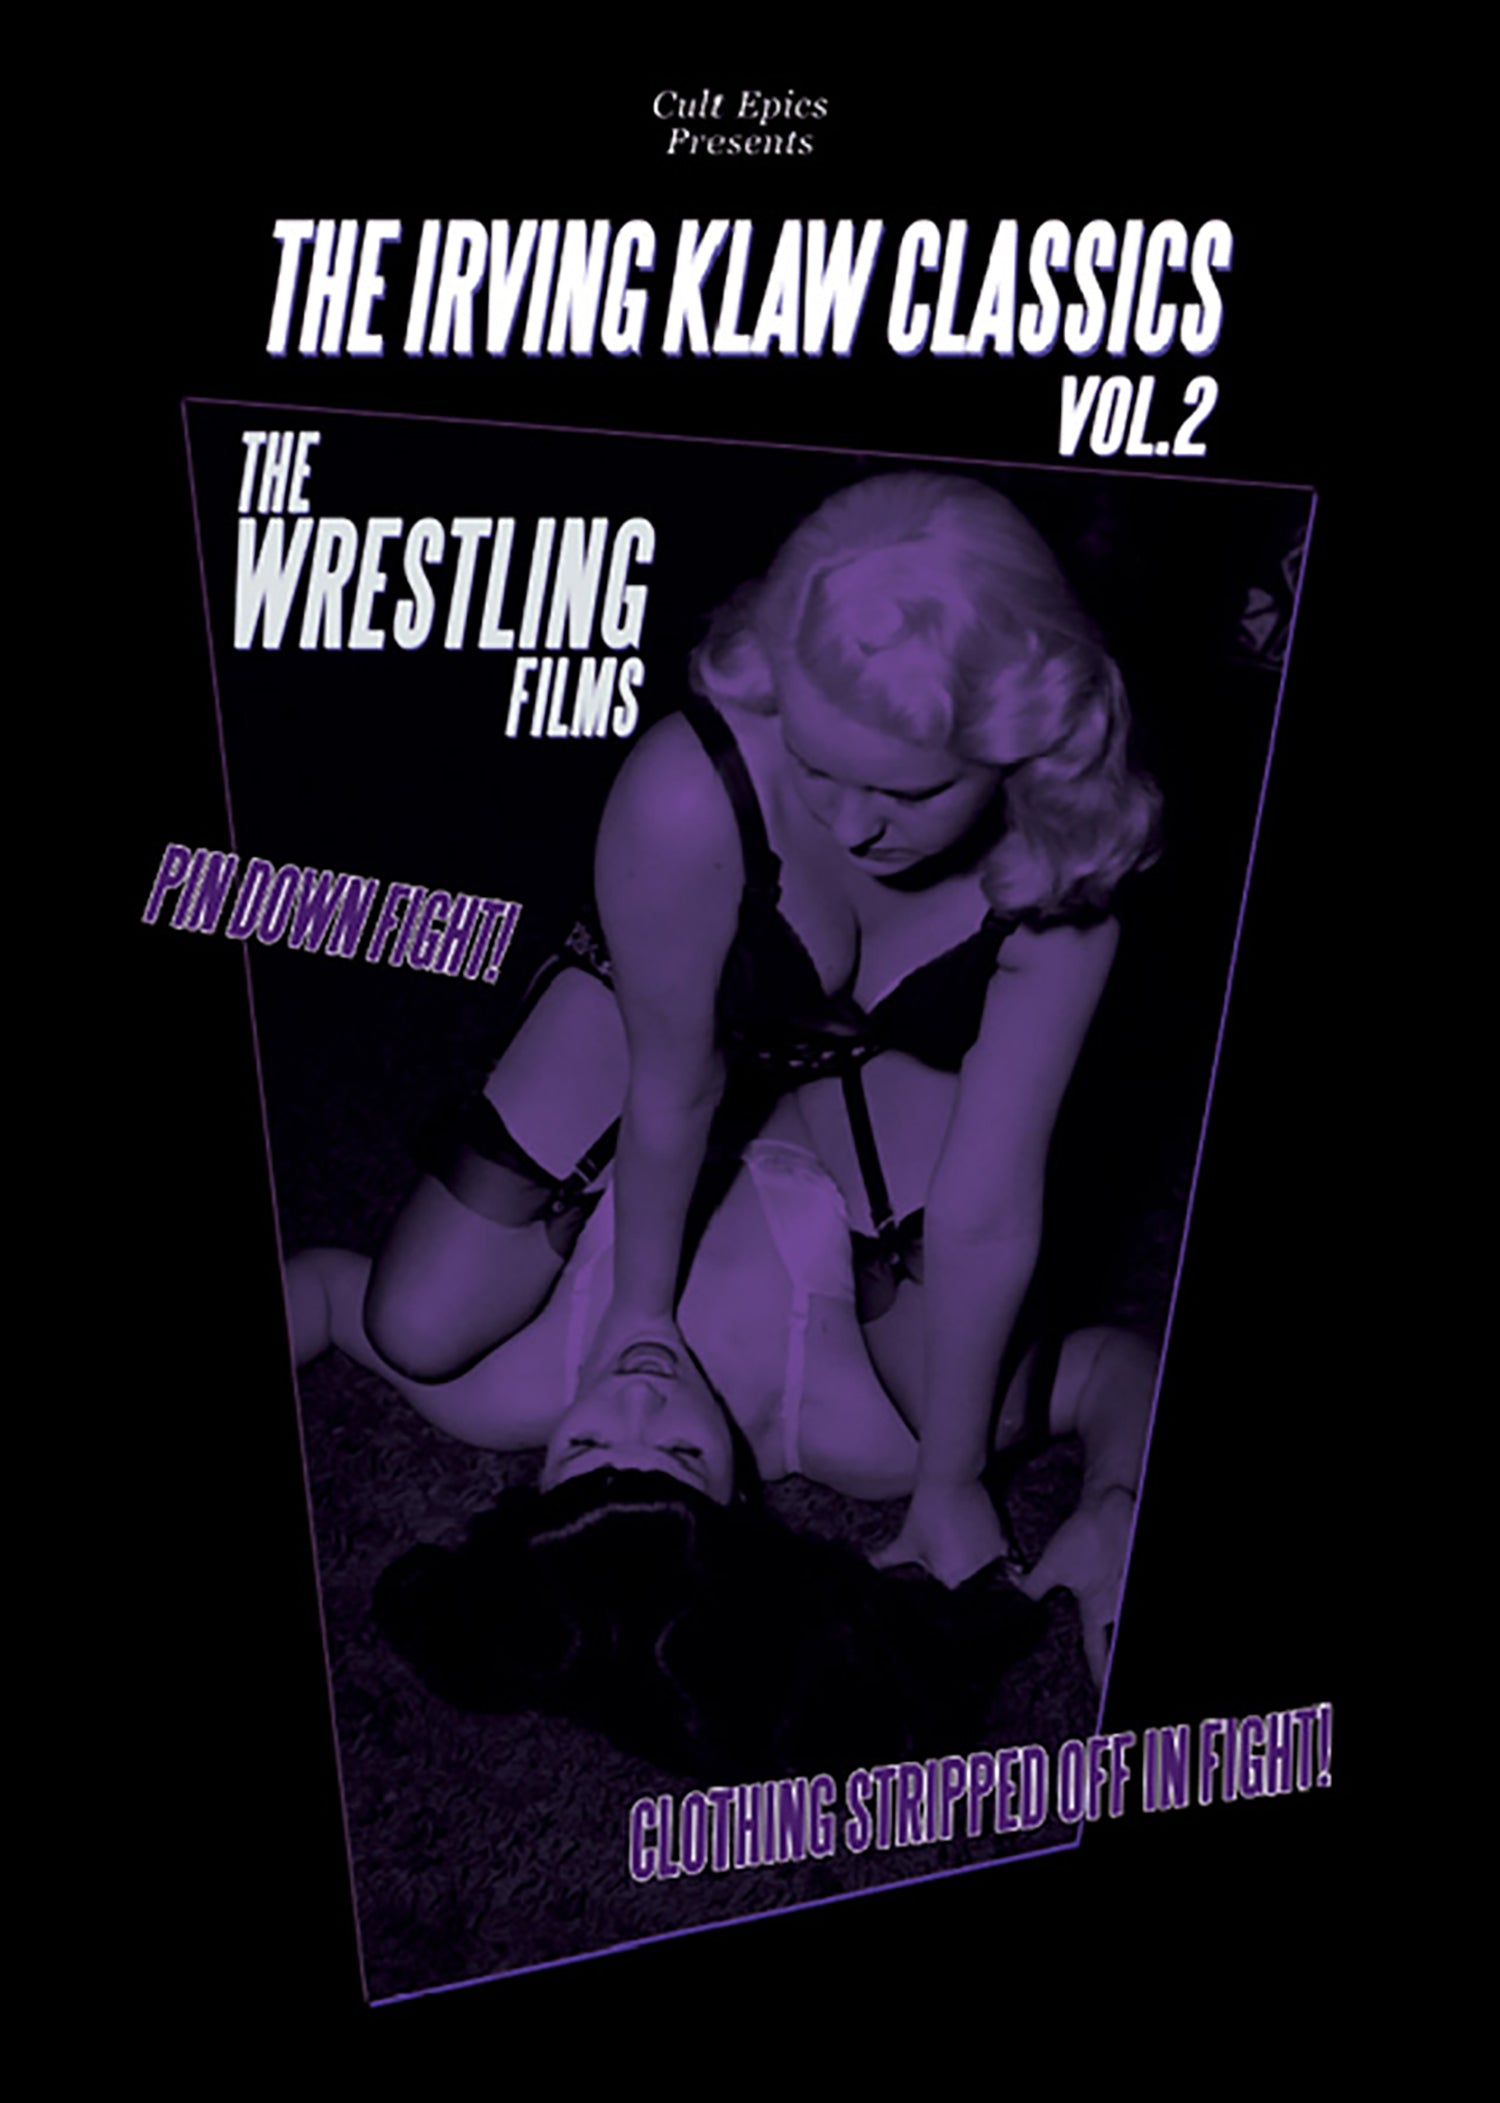 THE IRVING KLAW CLASSICS VOLUME 2: THE WRESTLING FILMS DVD